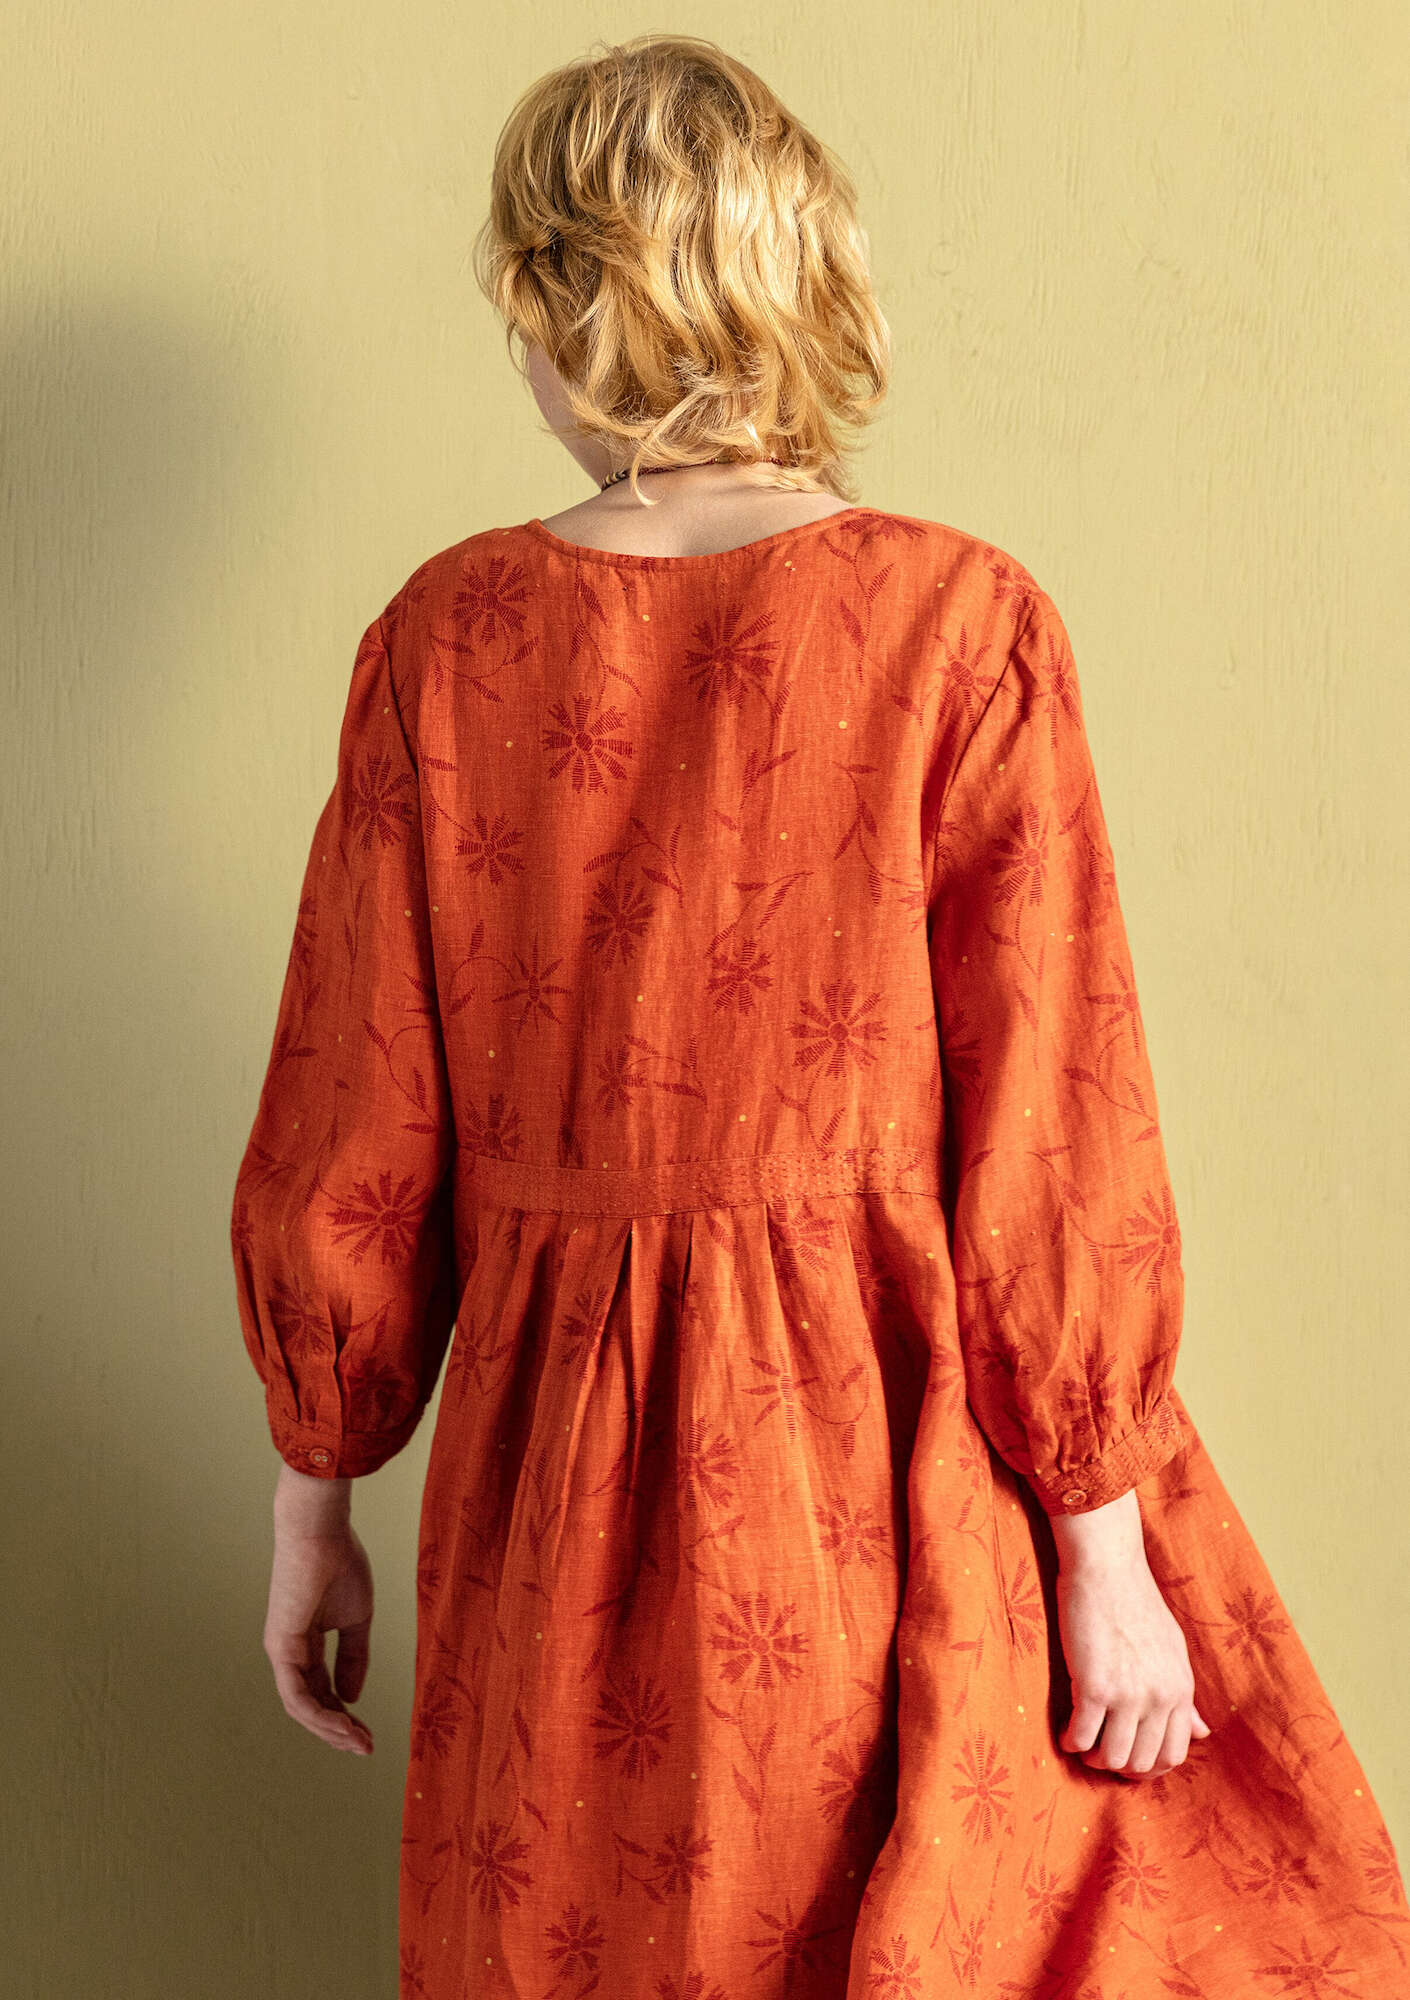 “Leia” woven linen dress henna/patterned